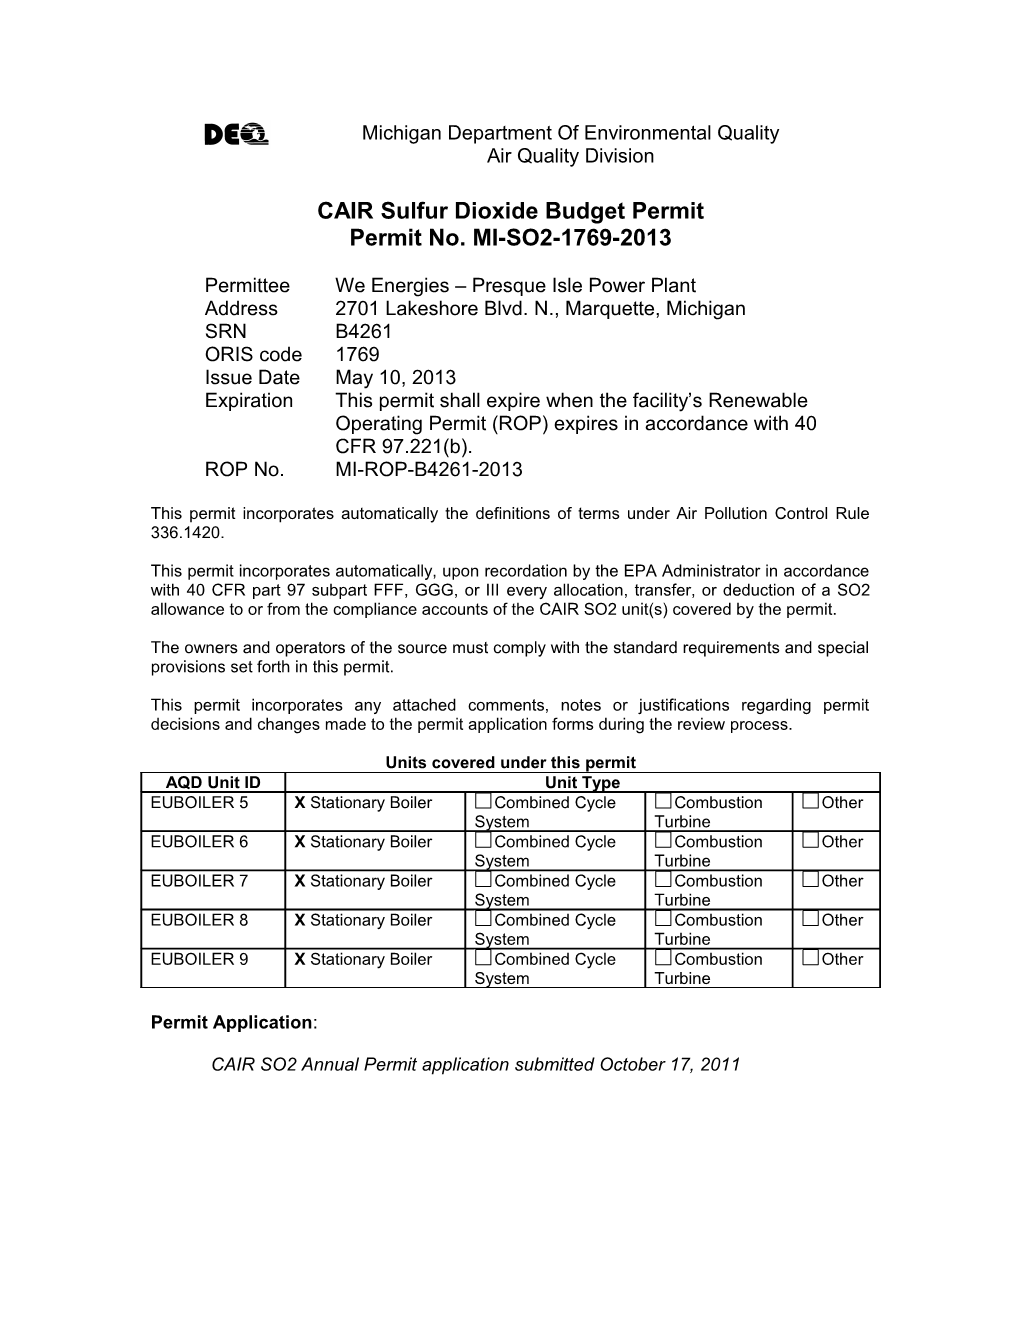 CAIR Sulfur Dioxide Budget Permit